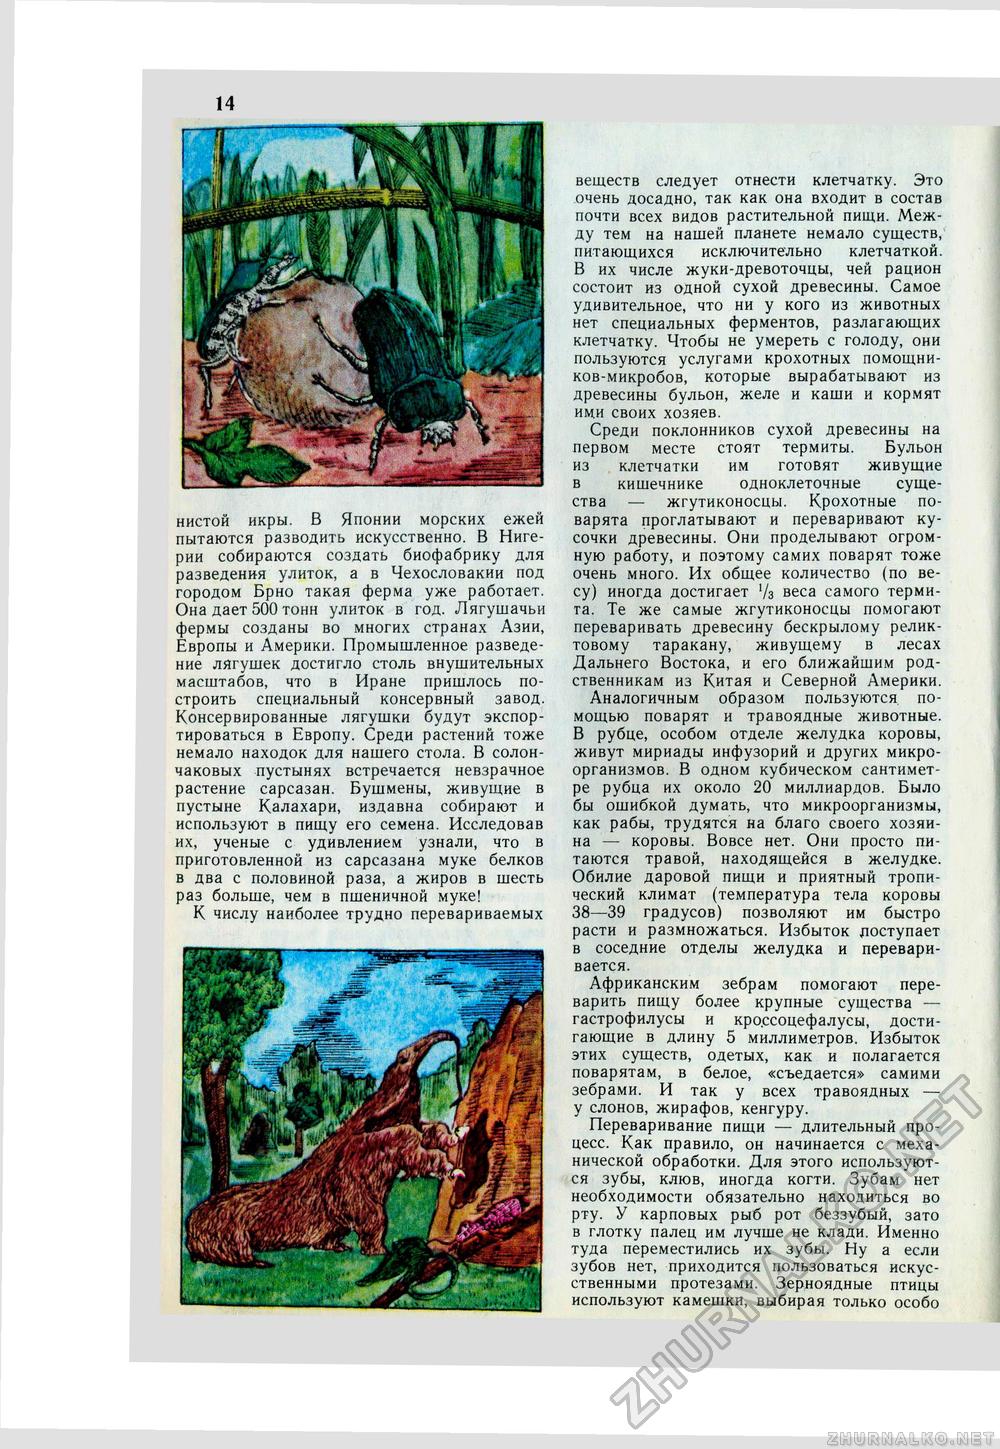 Юный Натуралист 1975-09, страница 17